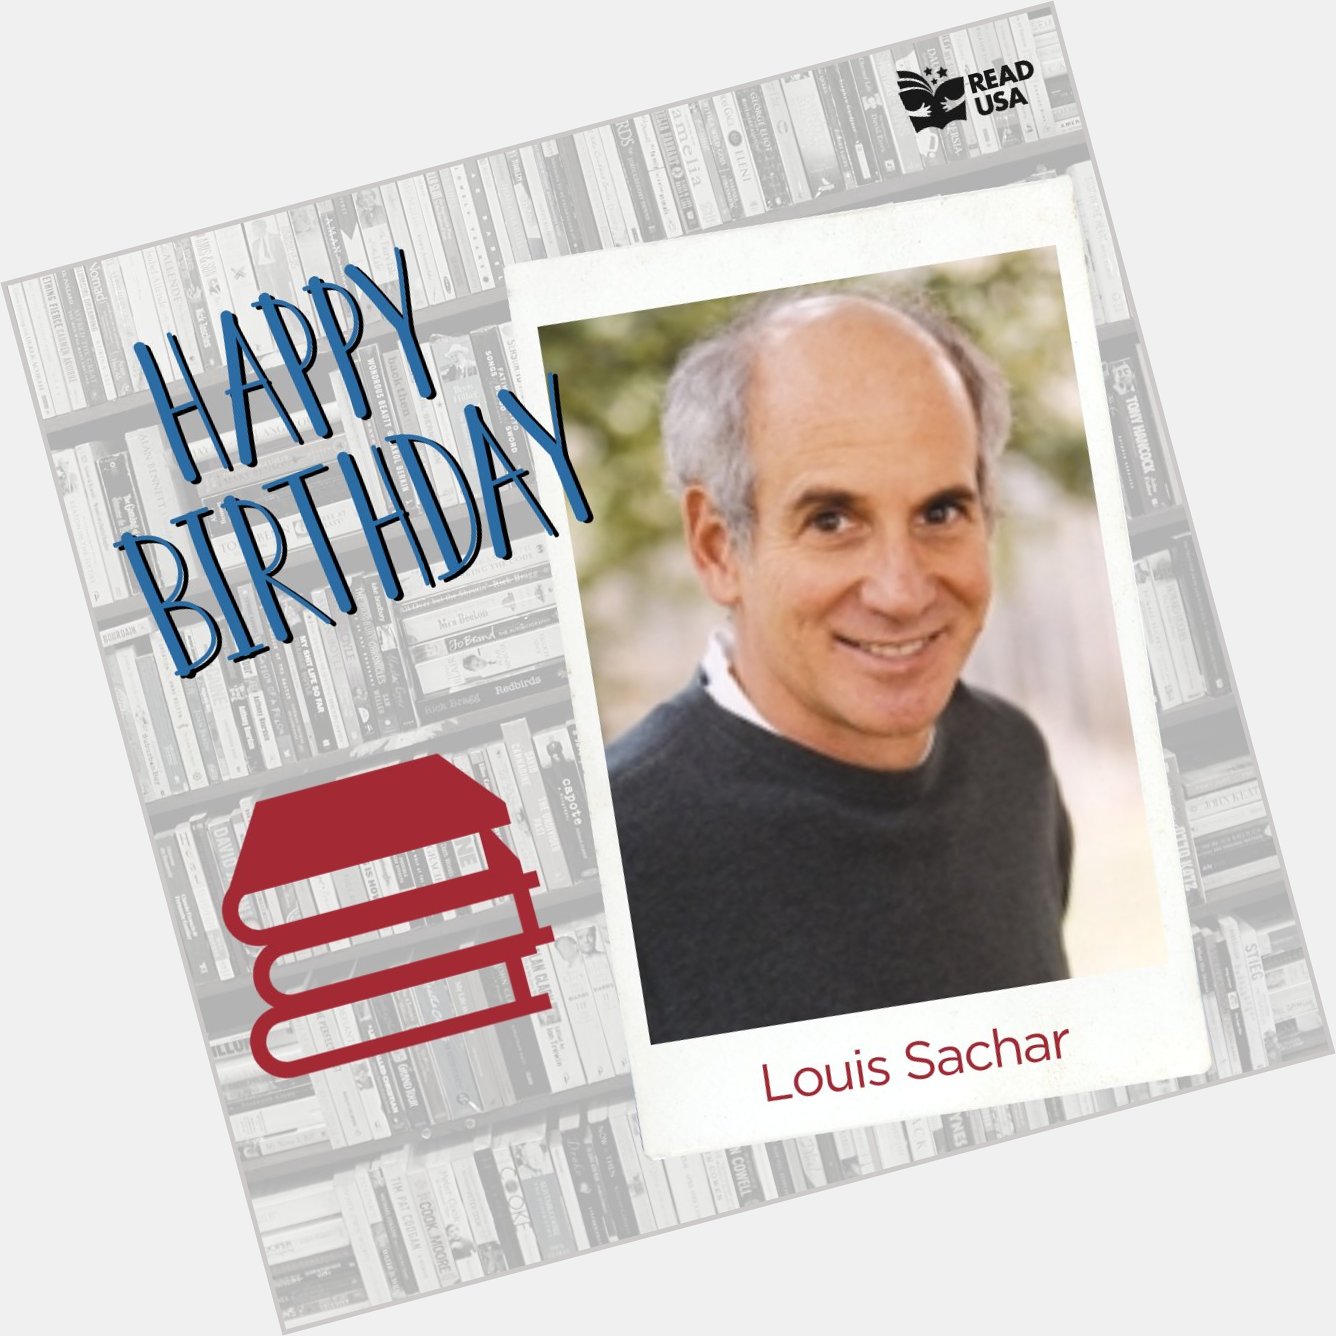 Happy Birthday Louis Sachar!  